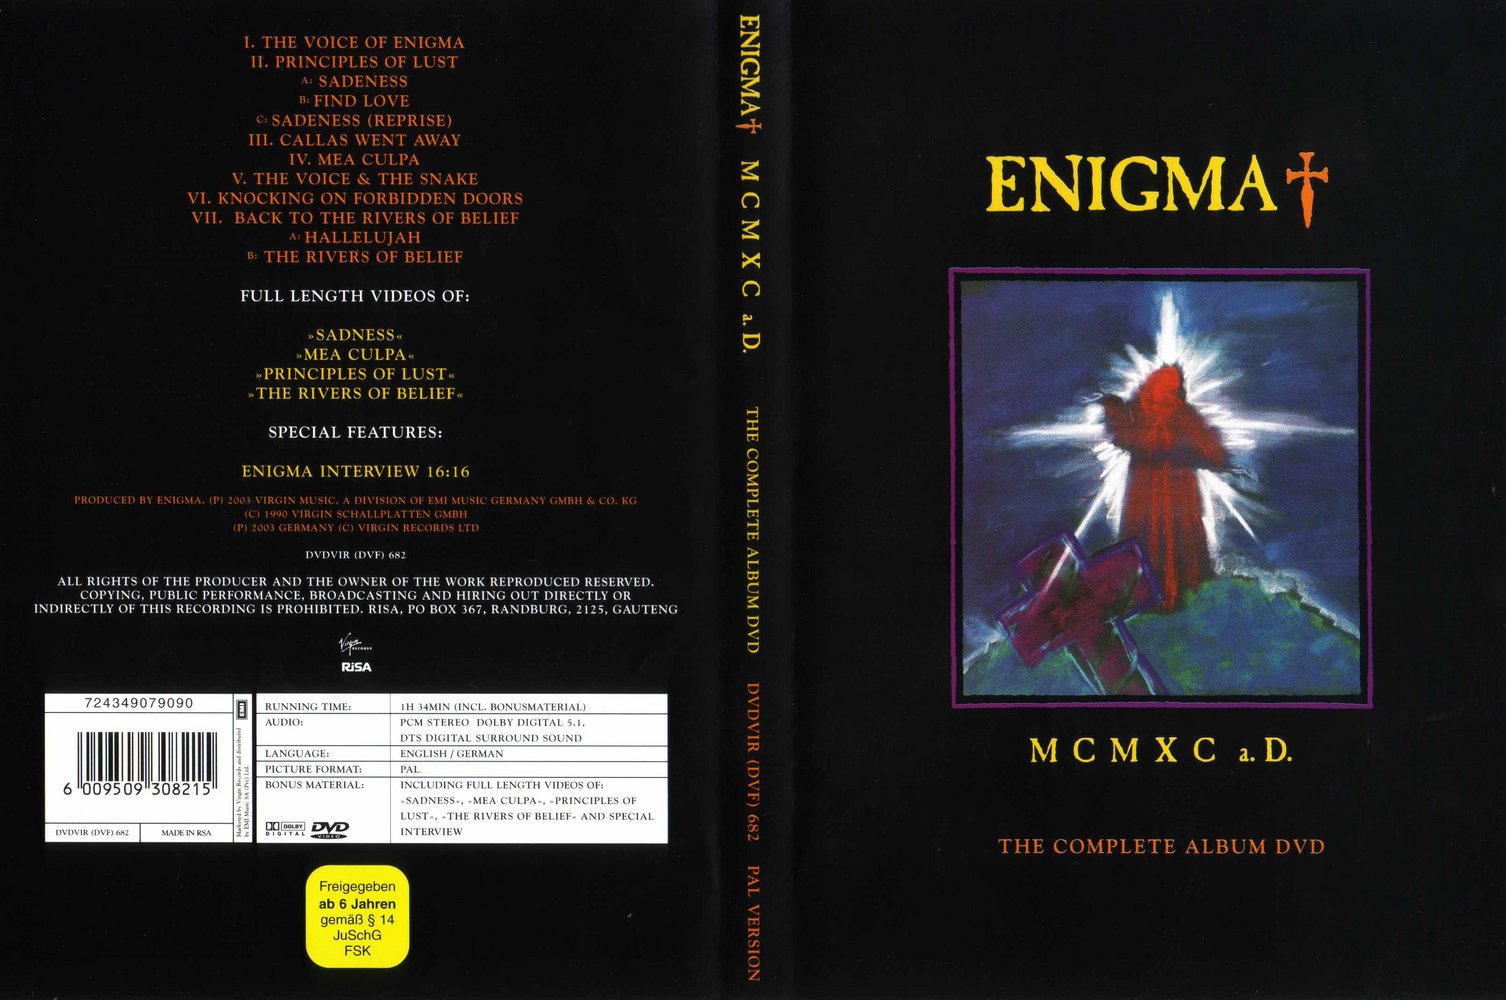 Jaquette DVD Enigma MCMXCaD